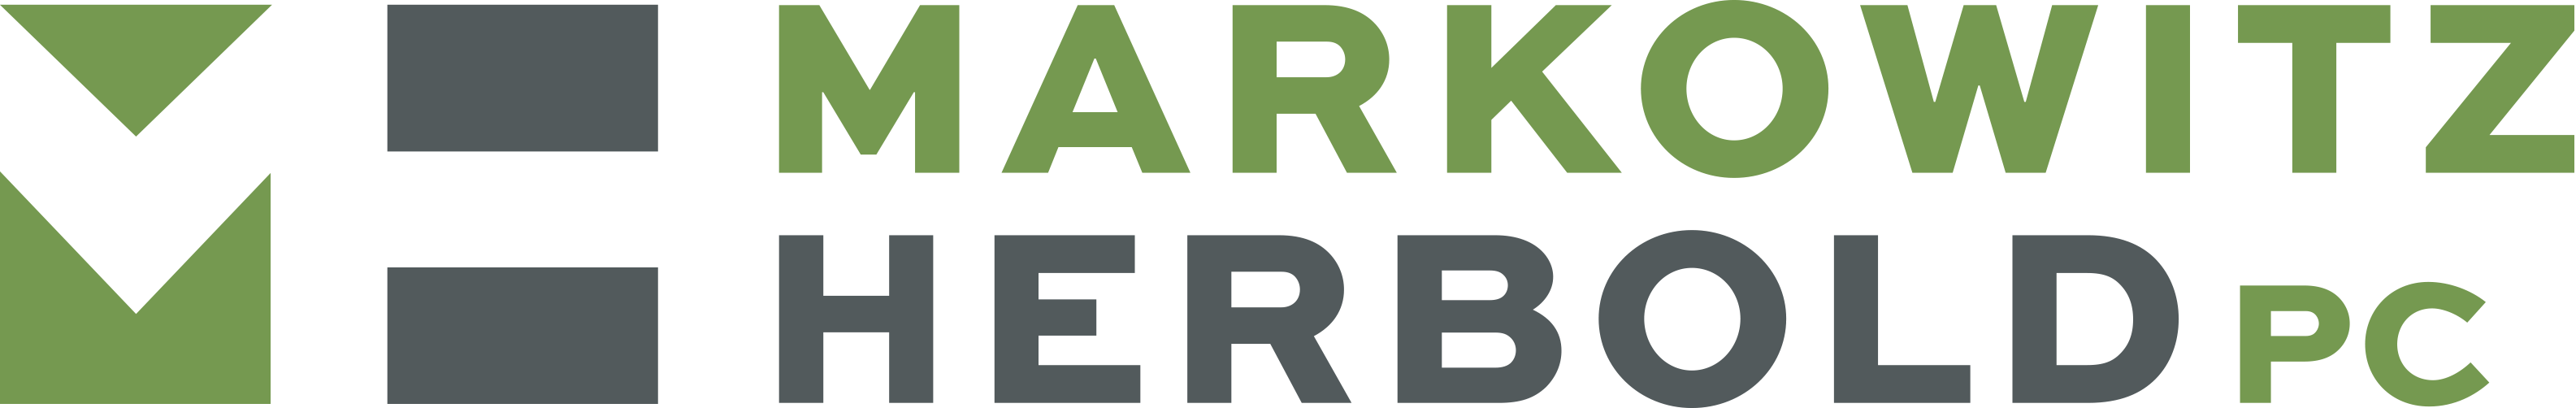 Markowitz Herbold PC Company Logo